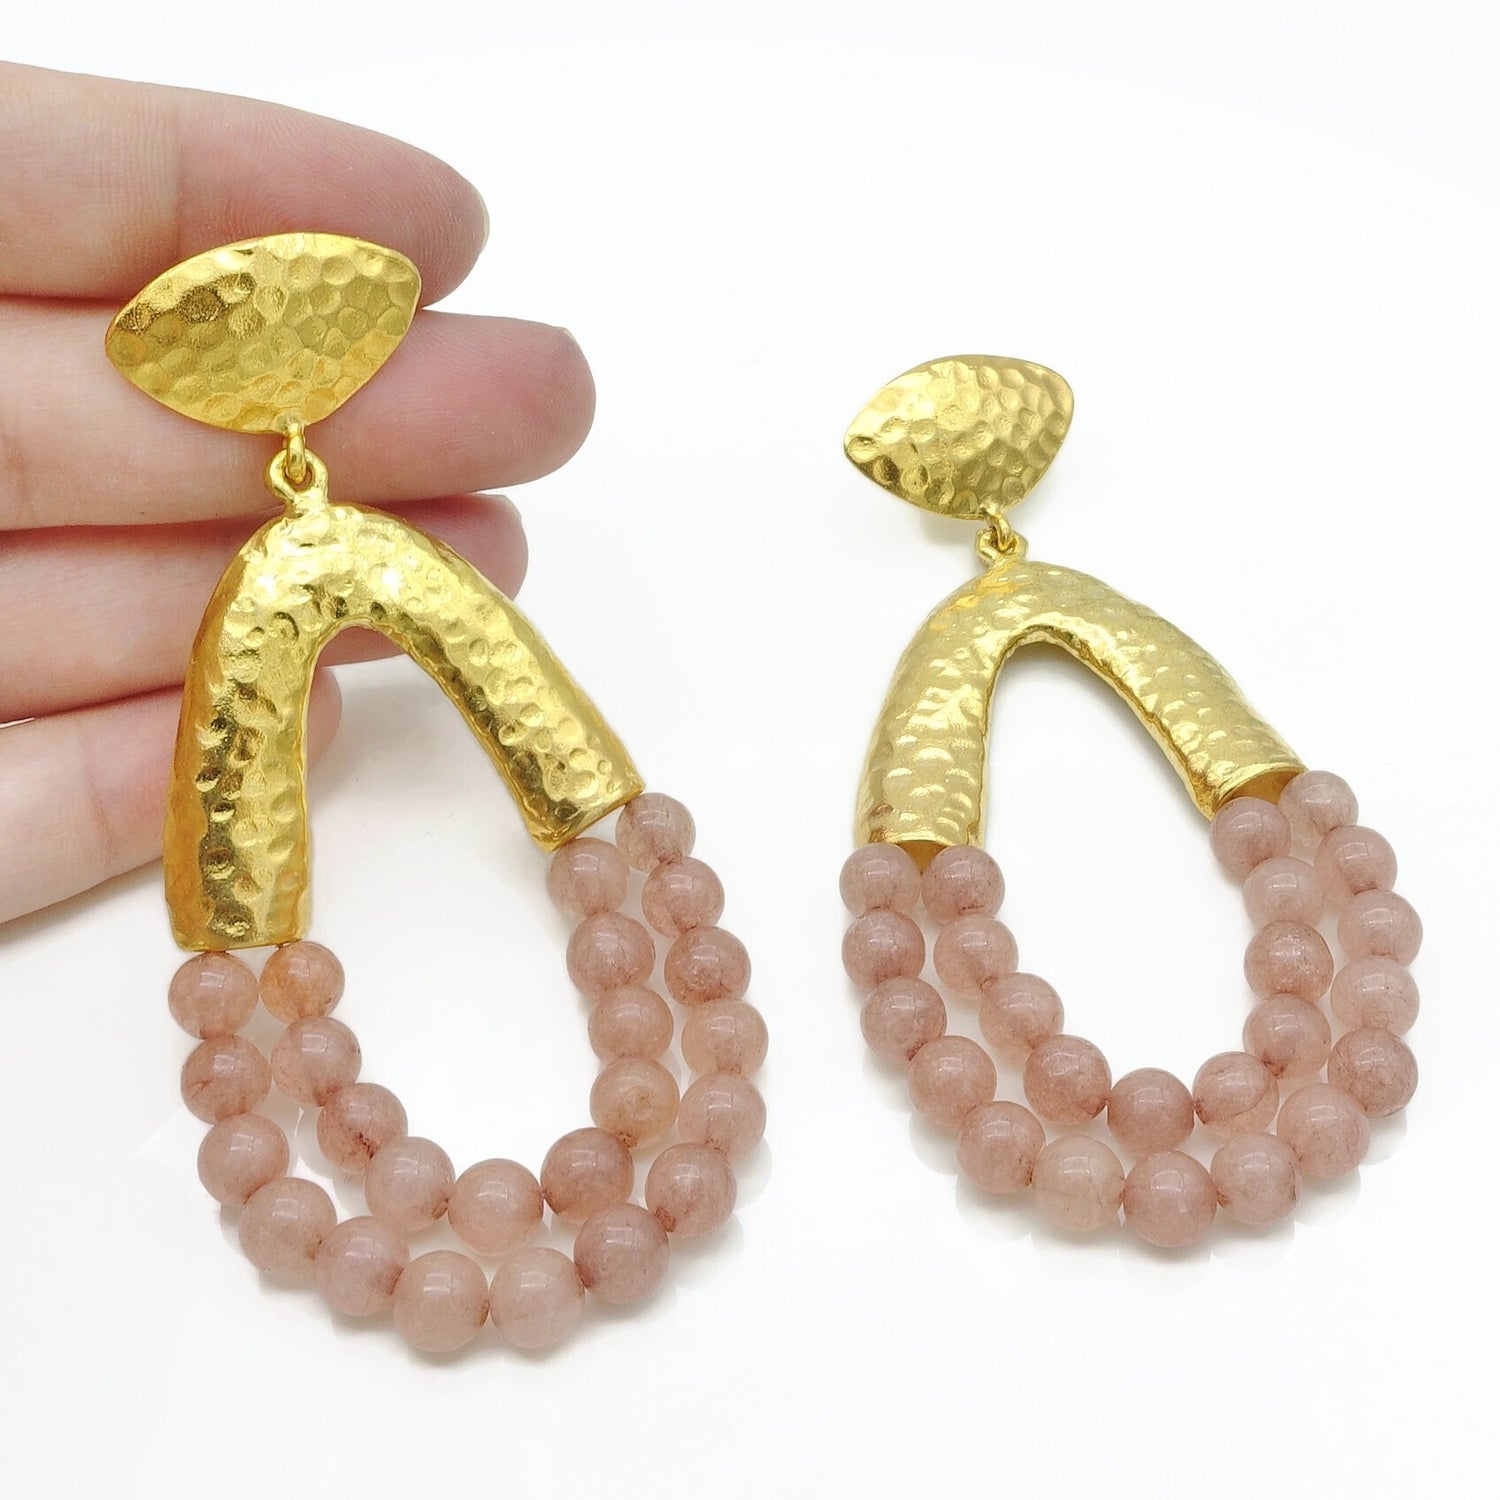 Aylas Jade handmade semi precious gemstone earrings - 21ct Gold plated Ottoman style